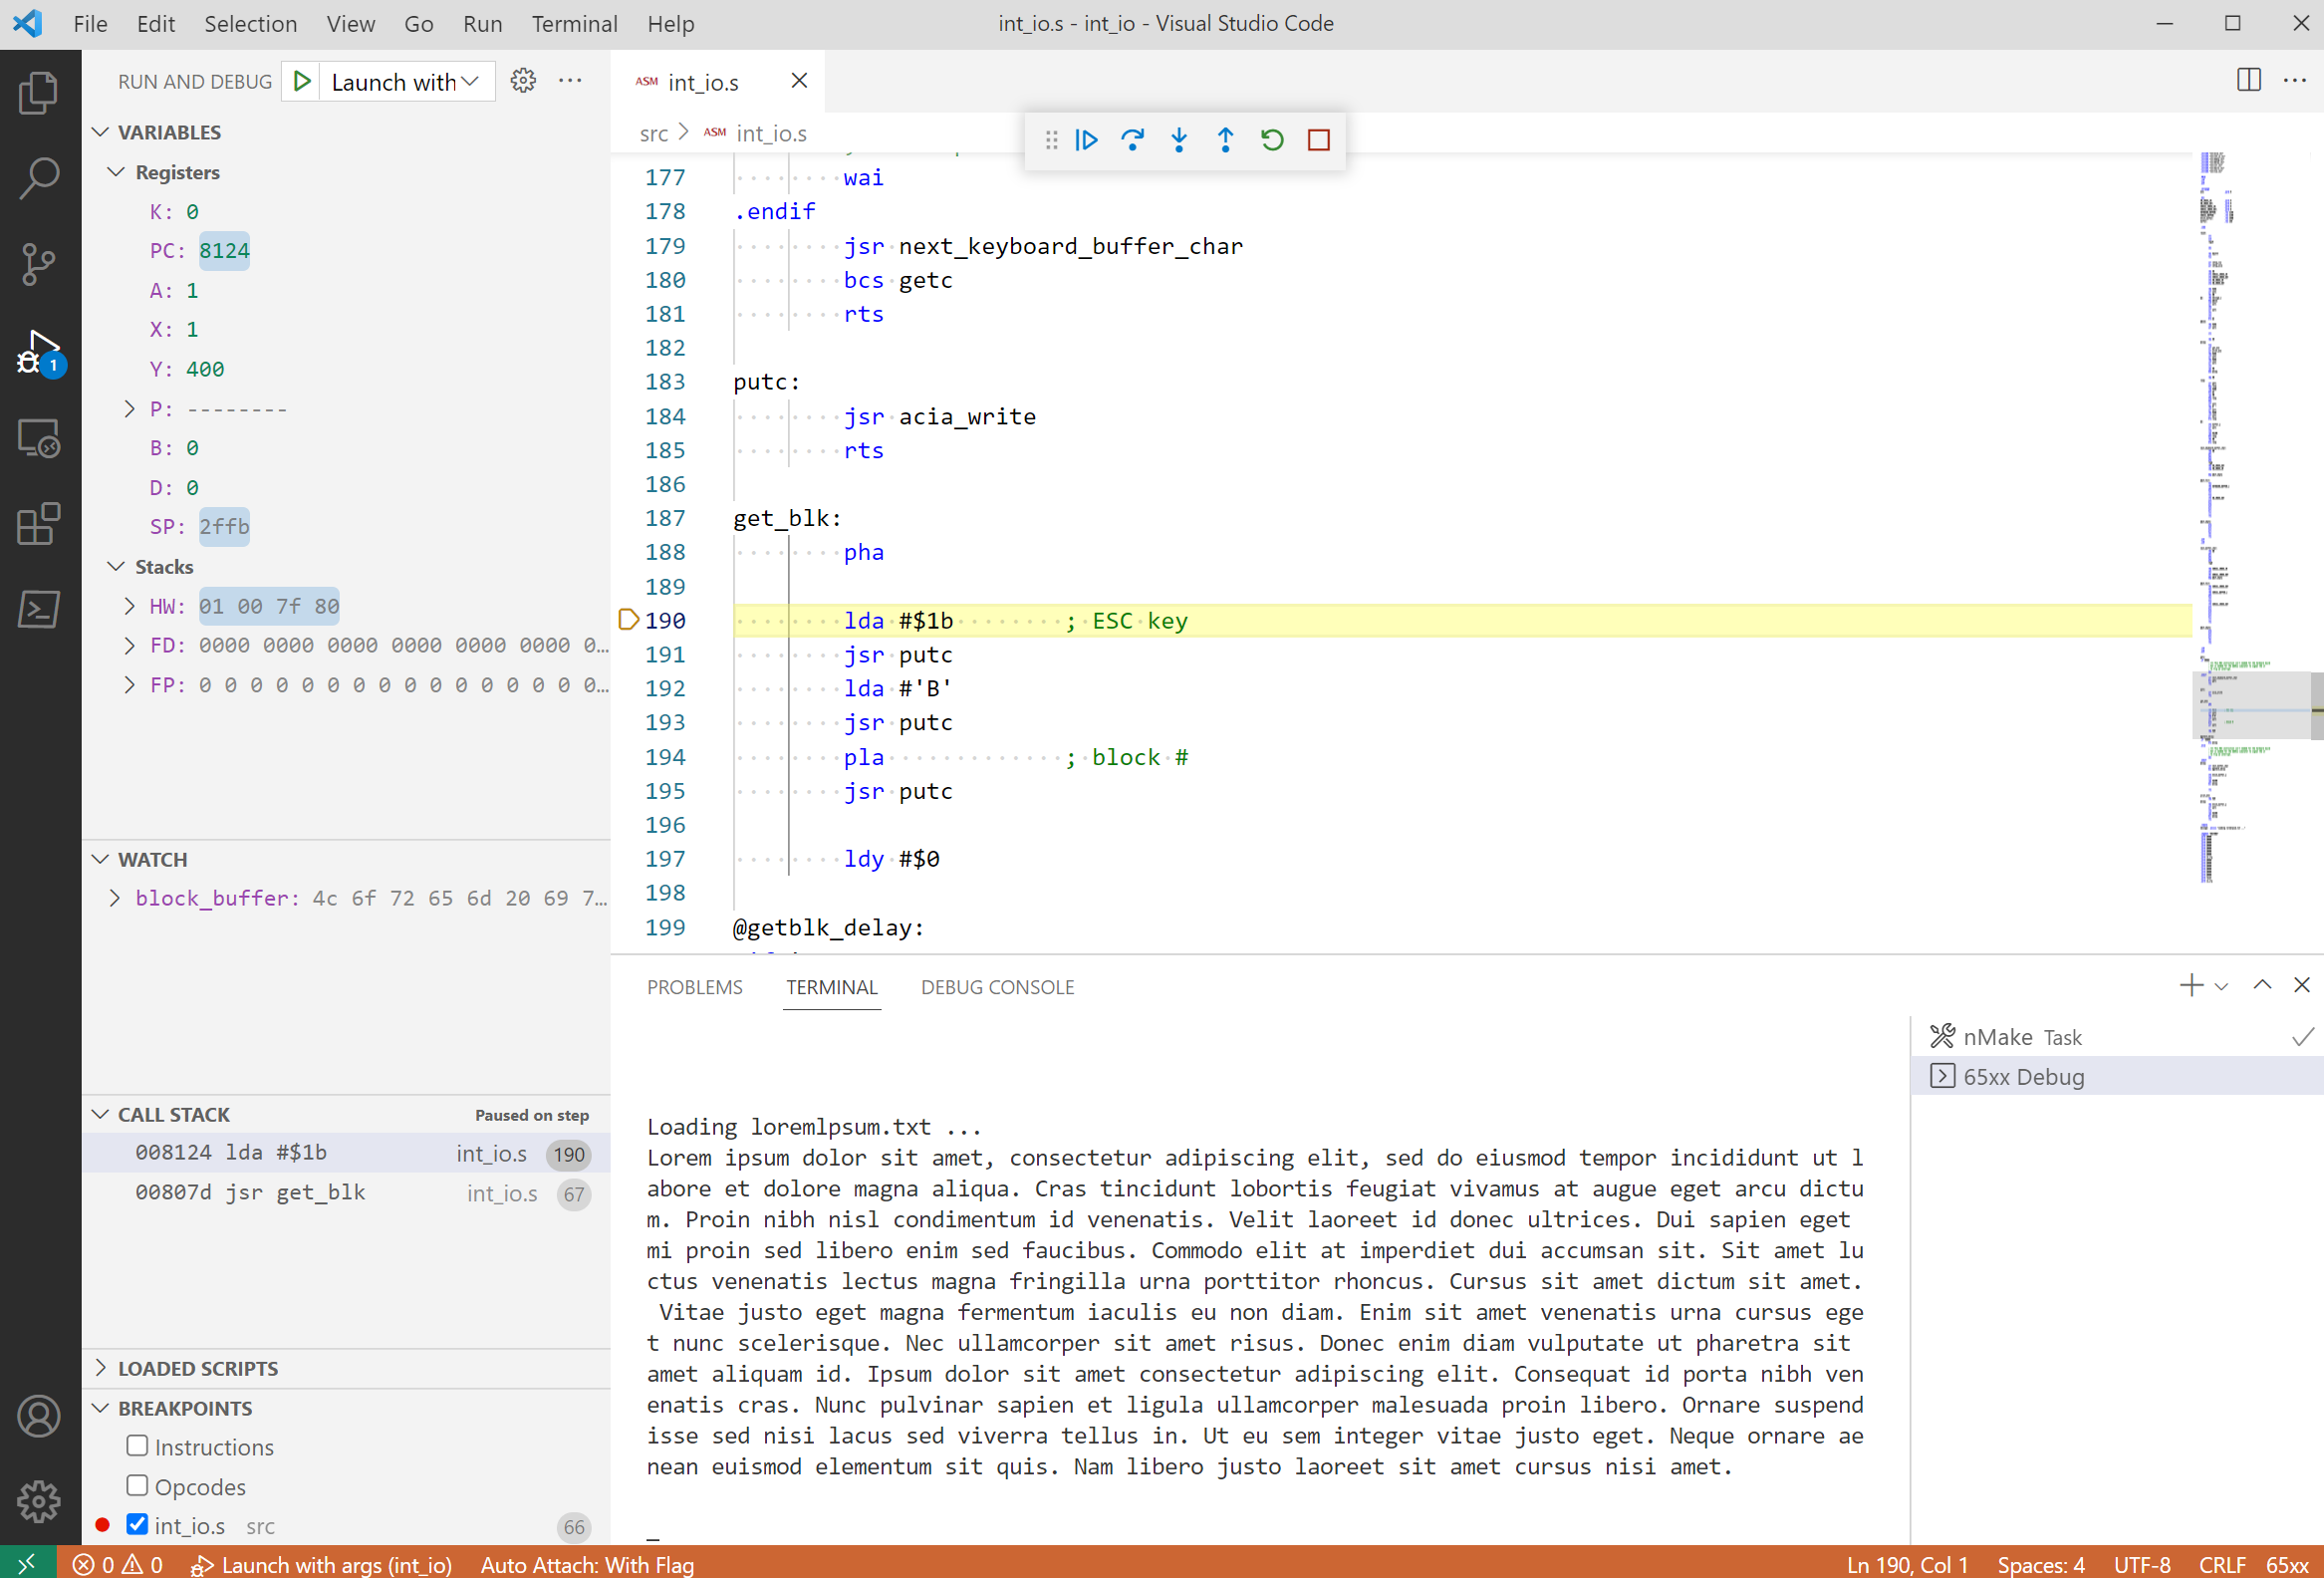 Screenshot of db65xx debugger